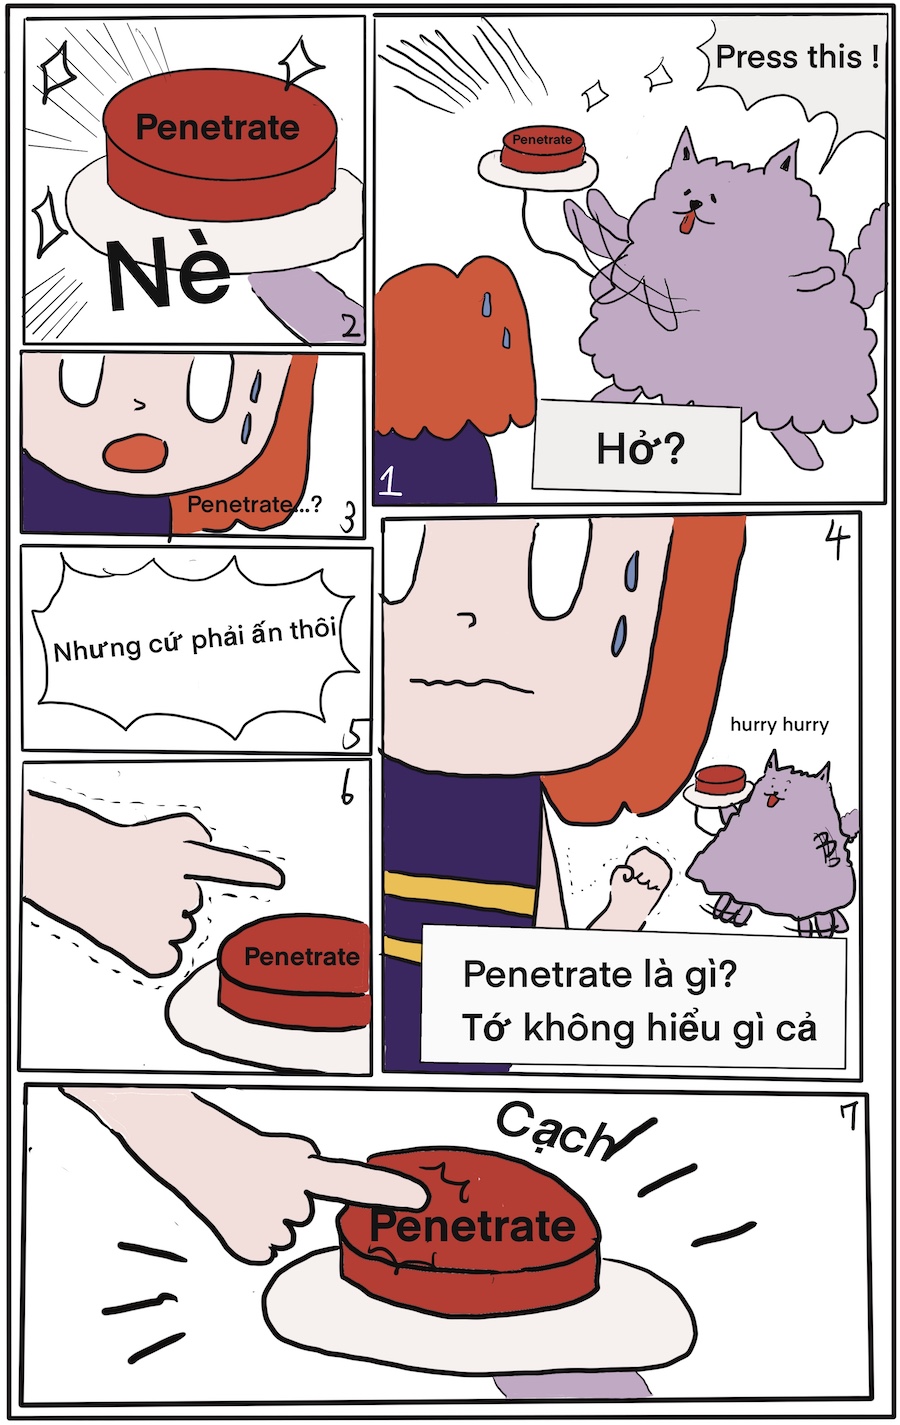 penetrate_vn3